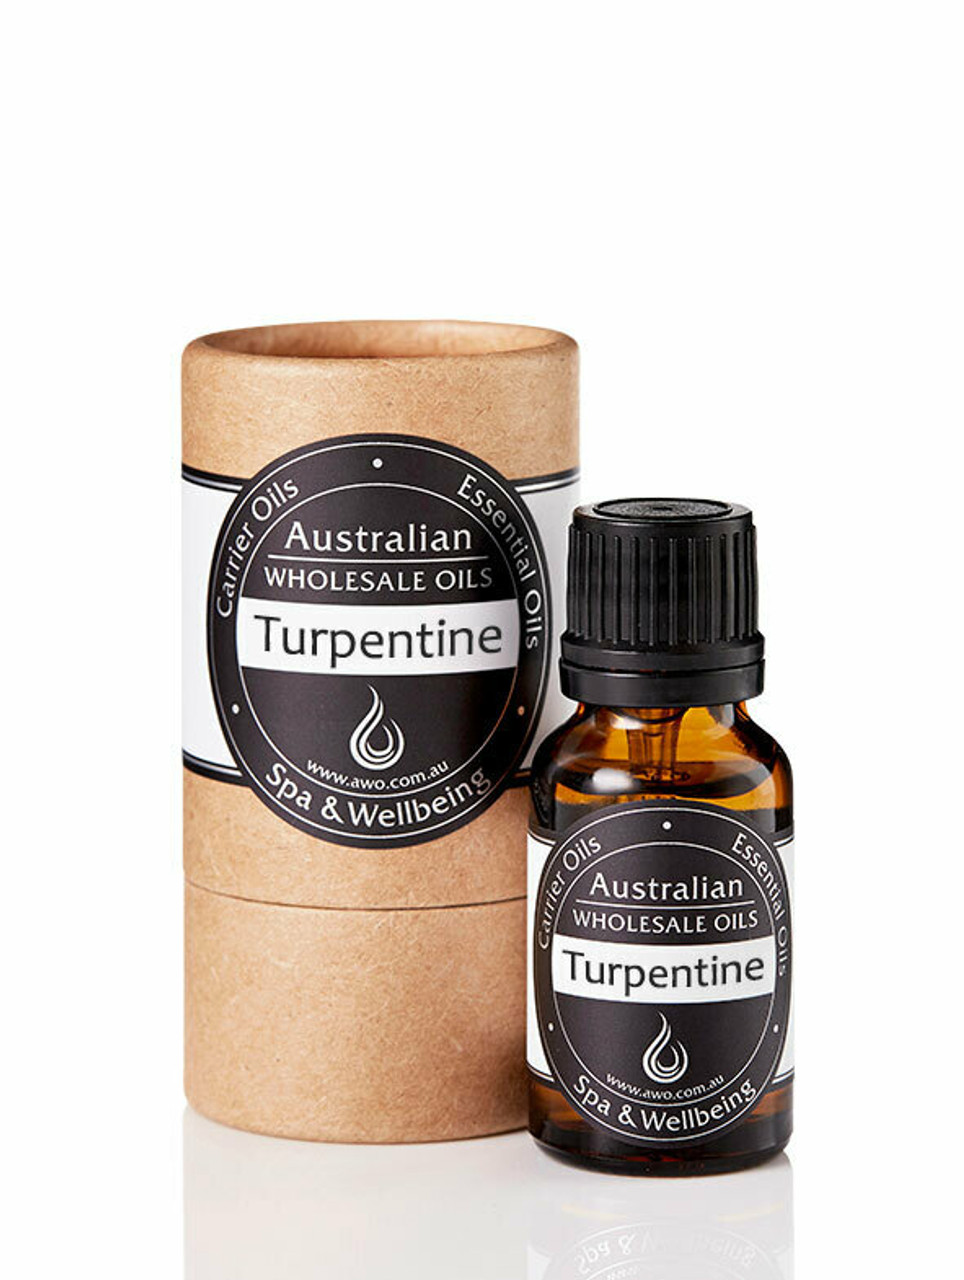 Pure Turpentine Essential Oil - Triple Distilled